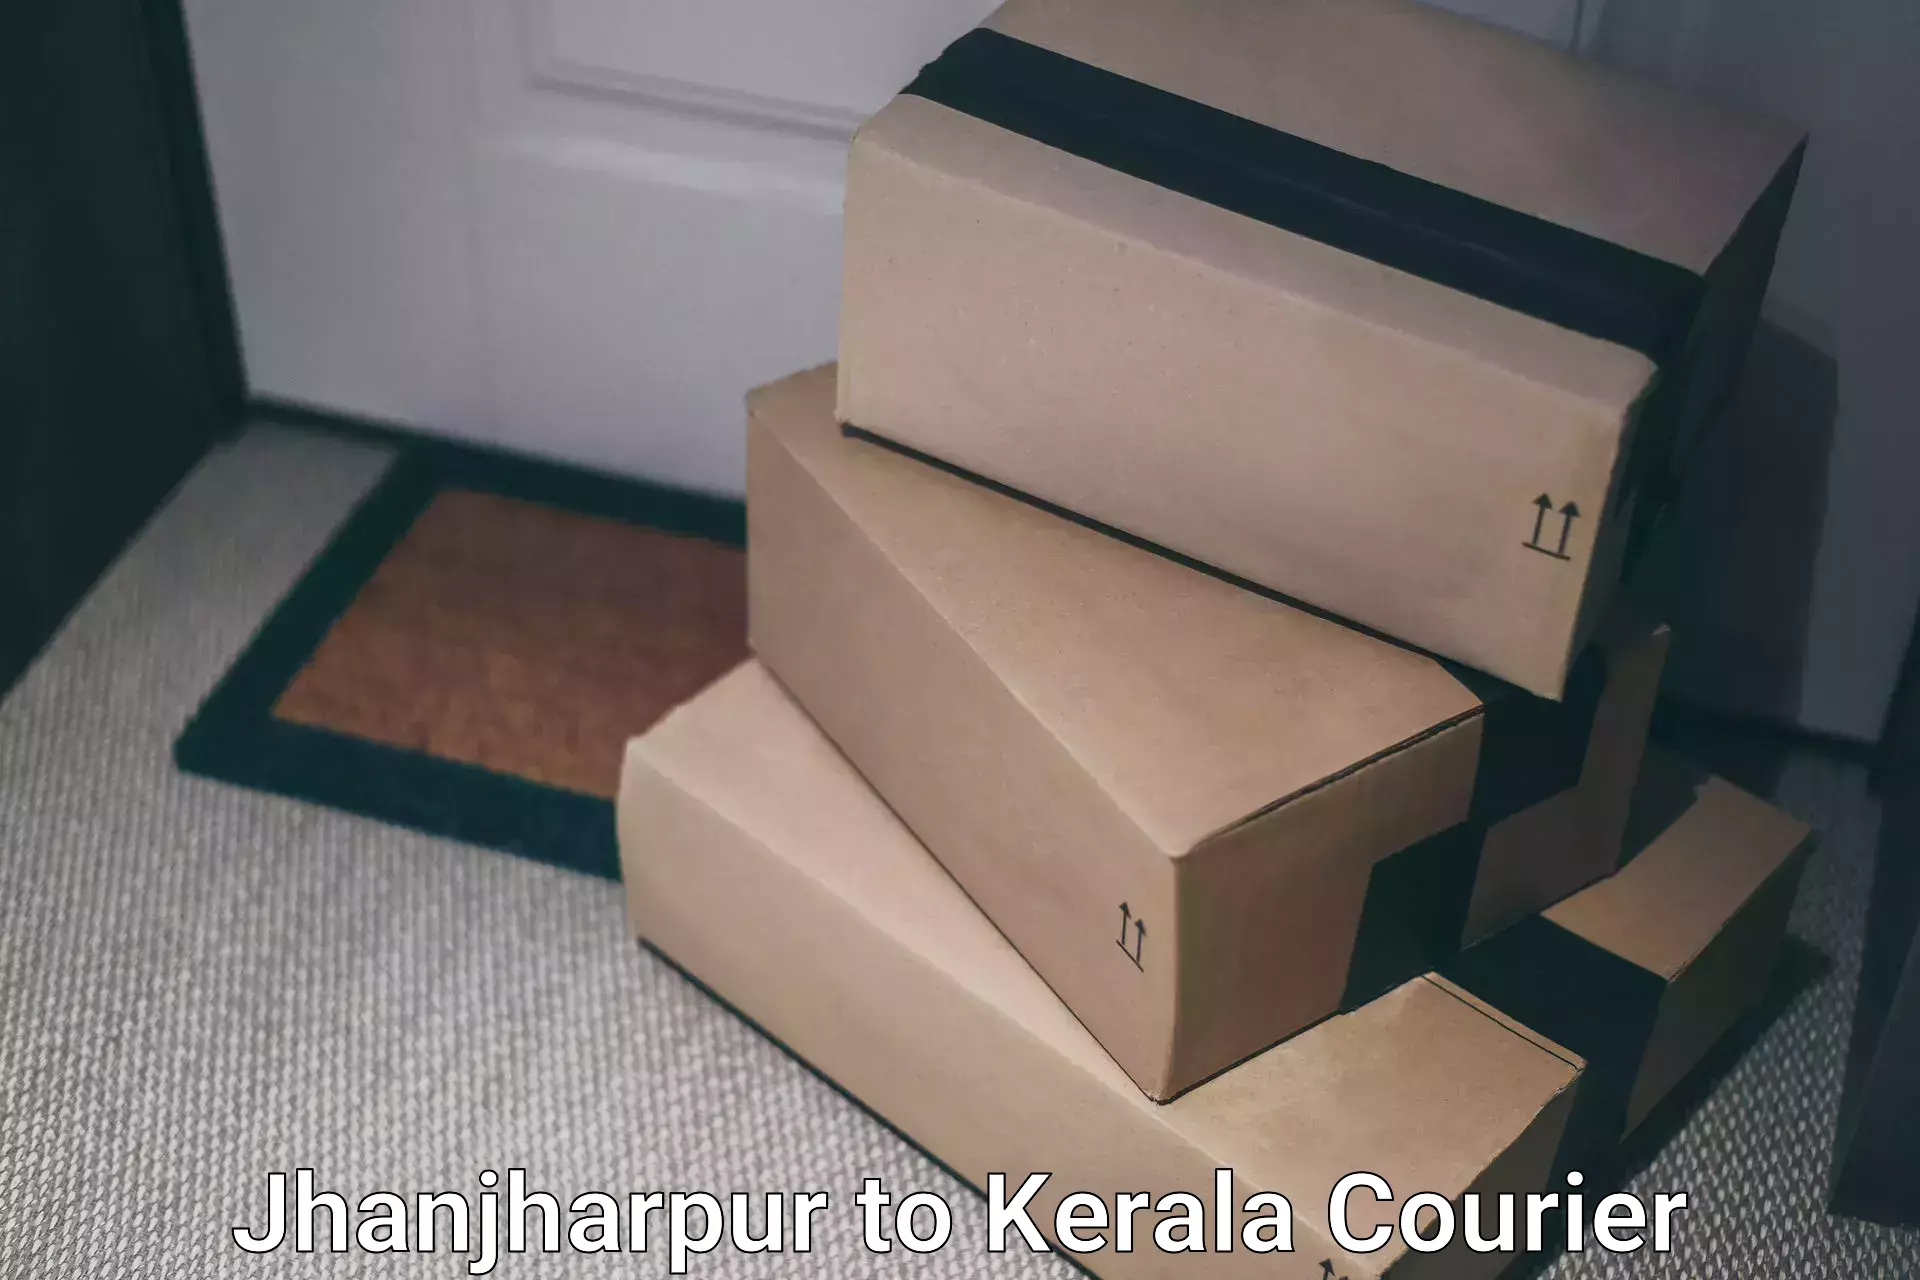 Express delivery capabilities Jhanjharpur to Kerala